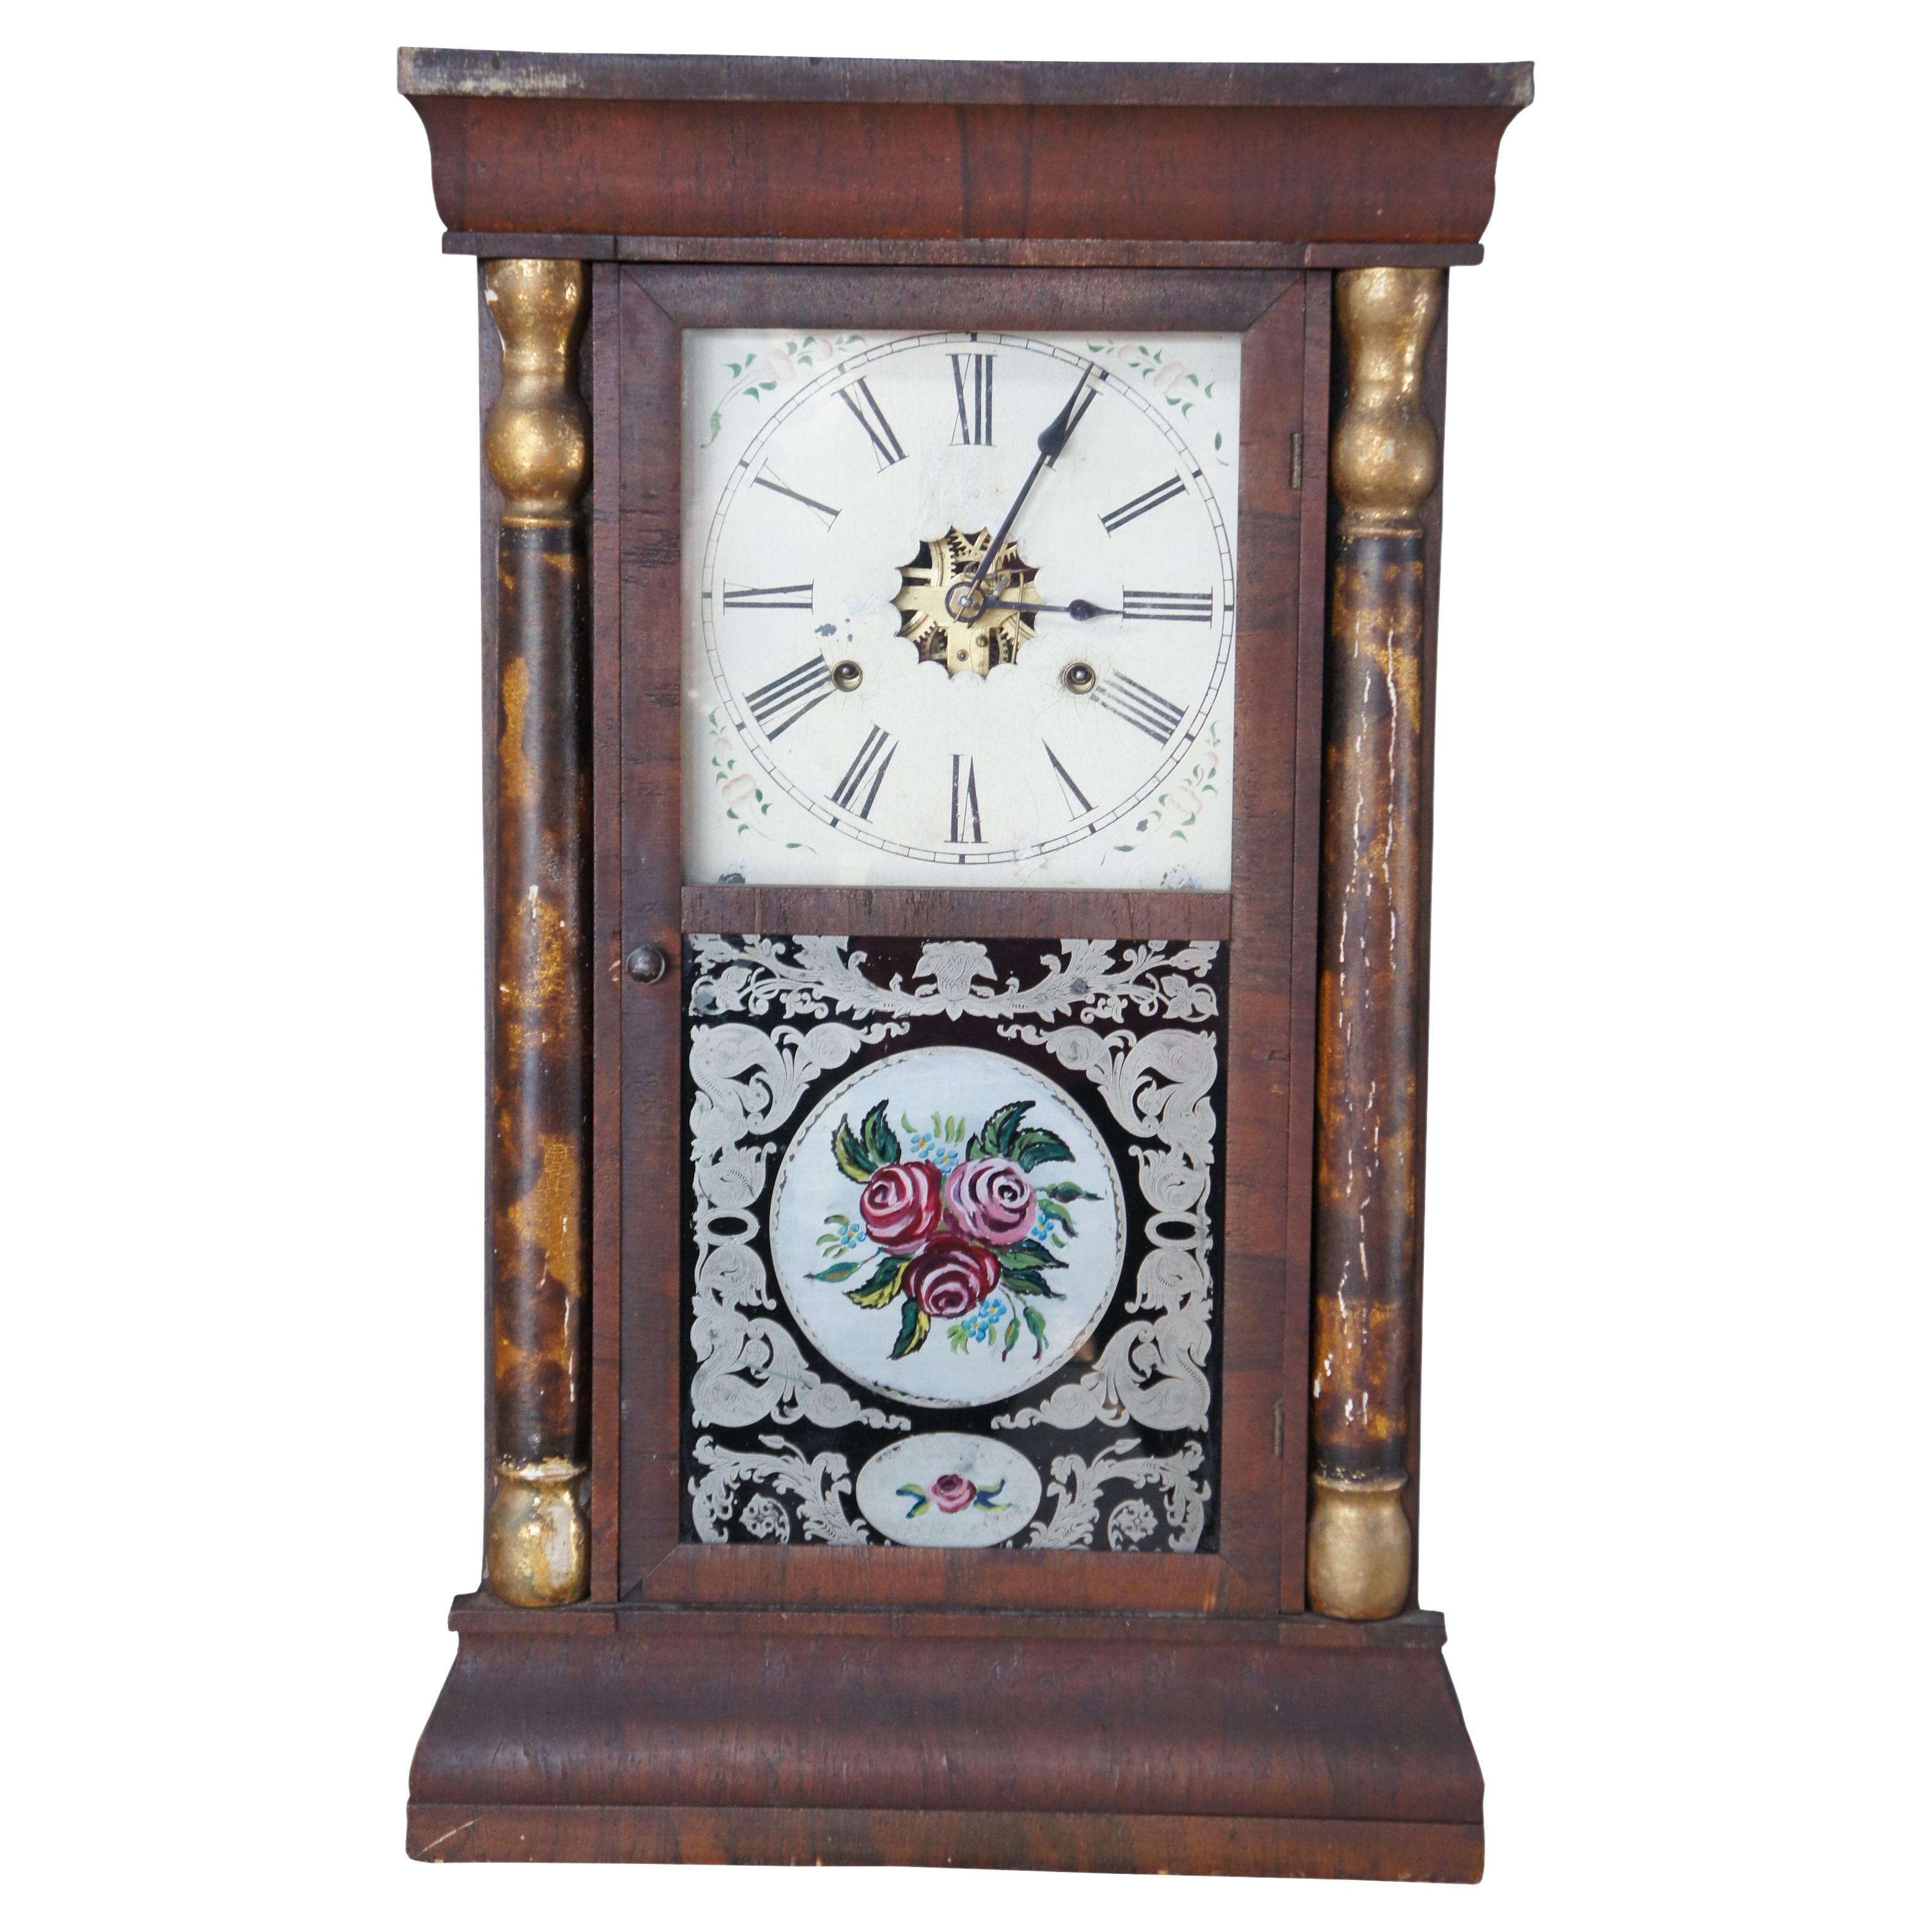 Antique Gilbert Manufacturing American Empire 30 Hr Mahogany Mantel Shelf Clock